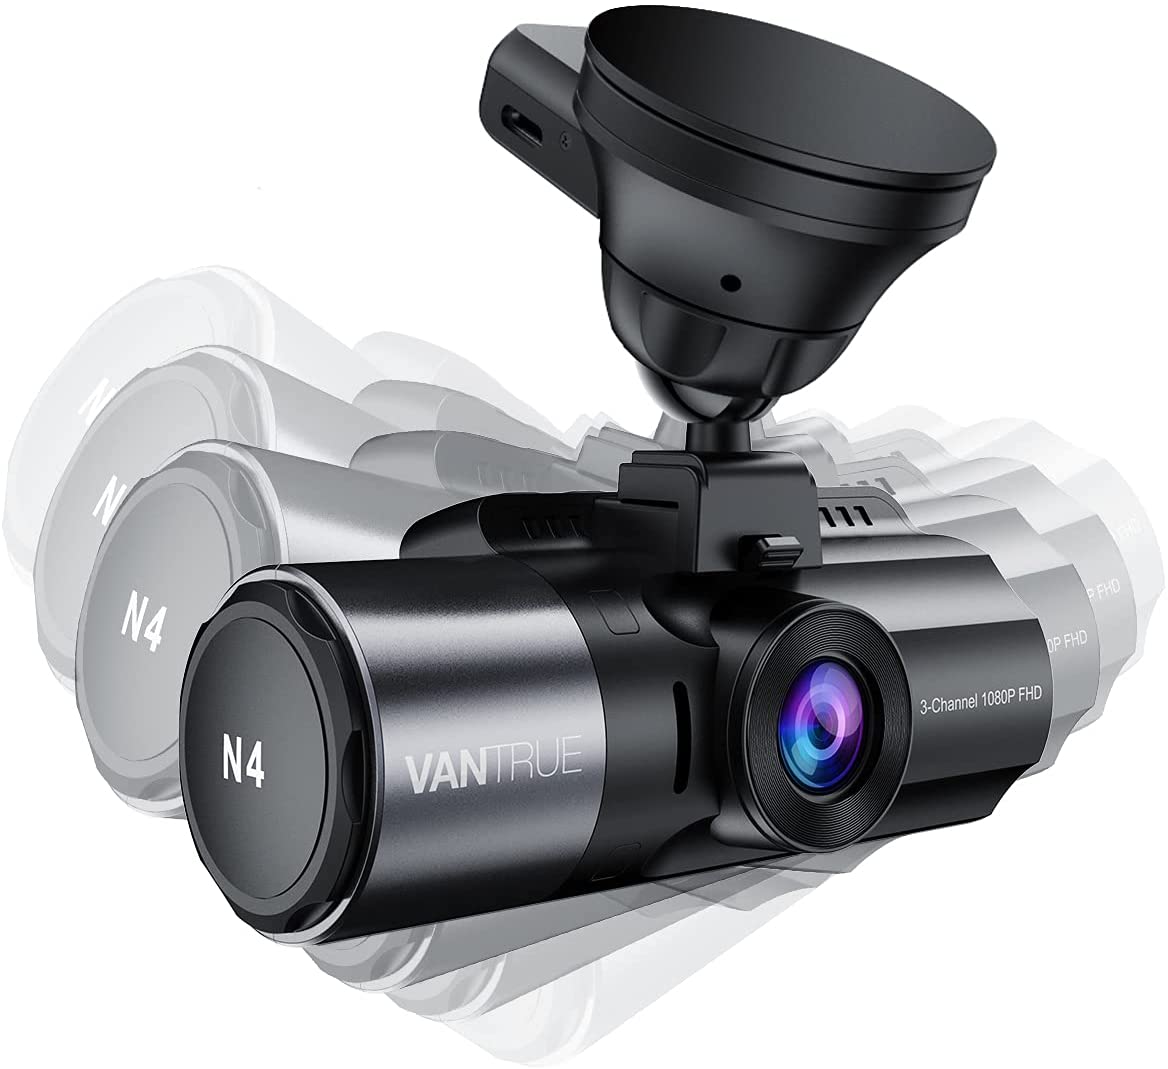 Vantrue N4 N2s X4s T3 Dash Cam GPS Receiver Module Type C USB Port Car Suction Cup Mount for Windows and Mac